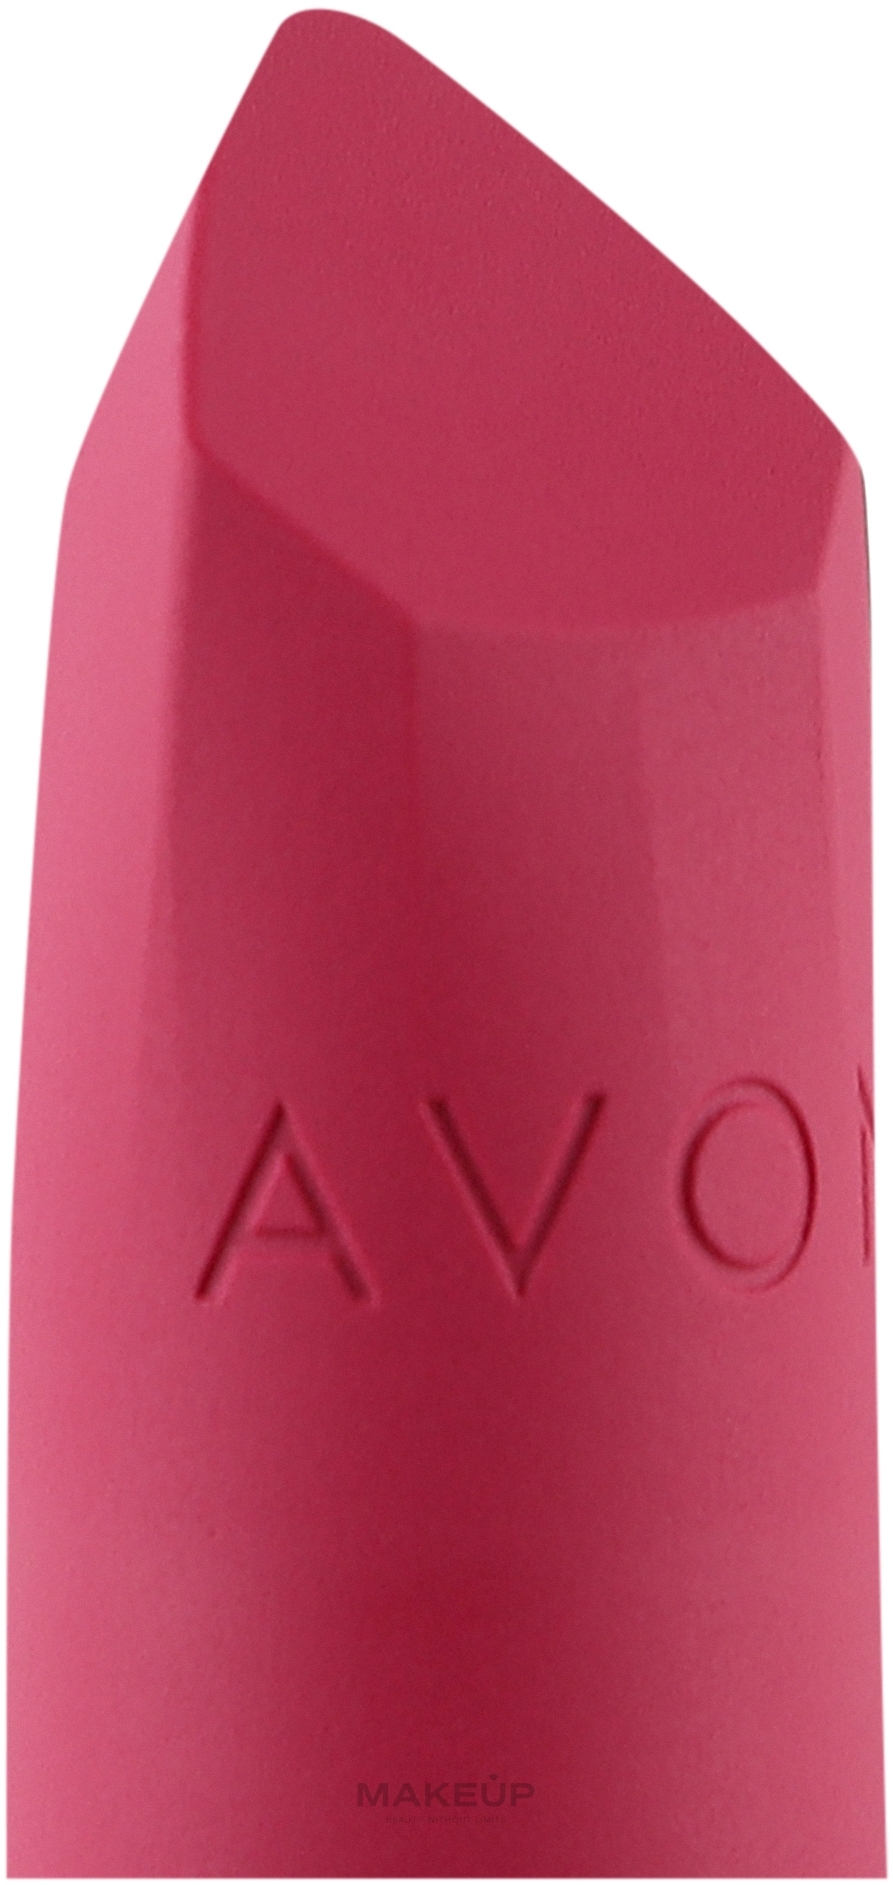 Mattierender Lippenstift - Avon True Colour Ultra-Matte Lipstick — Bild Adoring Love